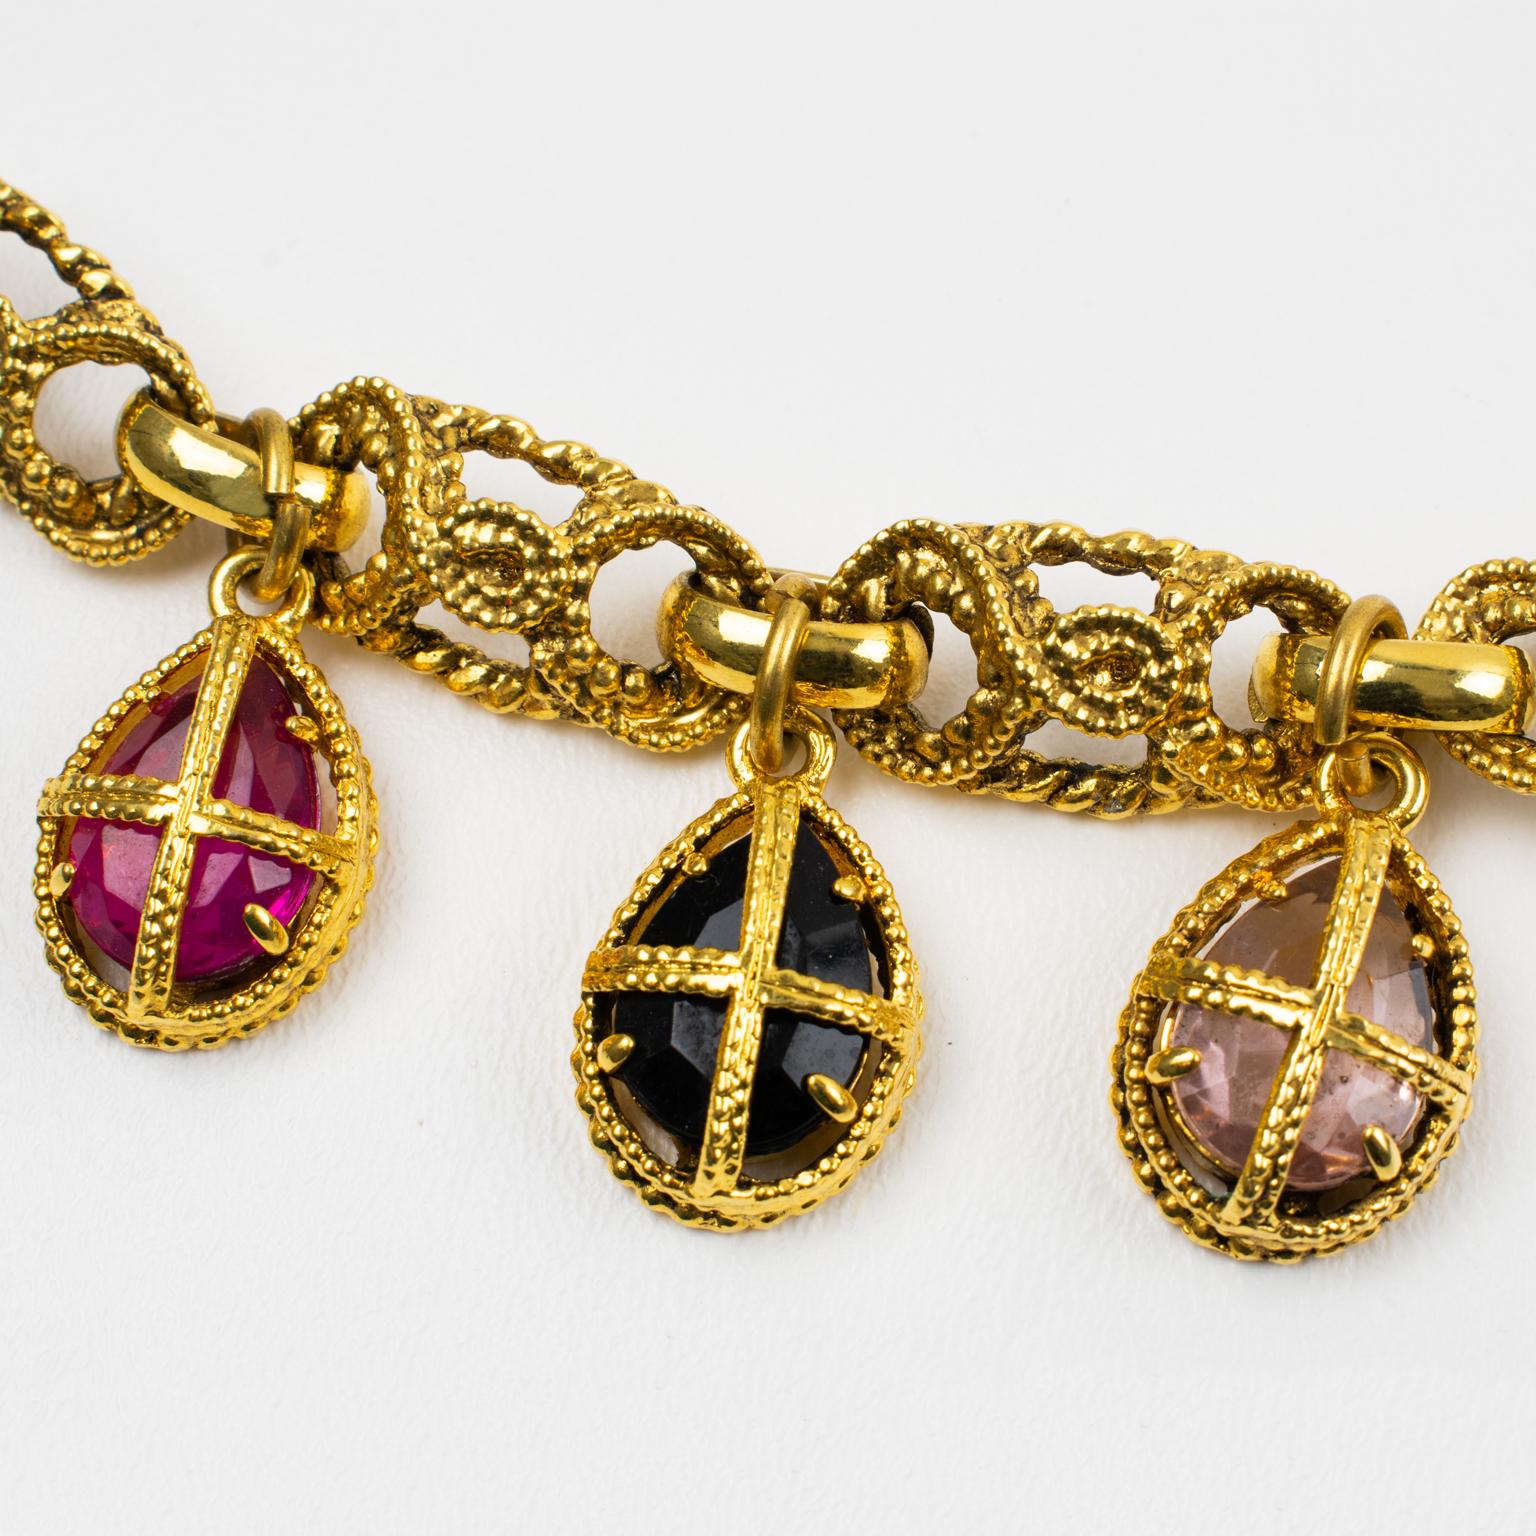 Women's or Men's Kalinger Paris Gilt Metal Link Bracelet with Jewel Charms